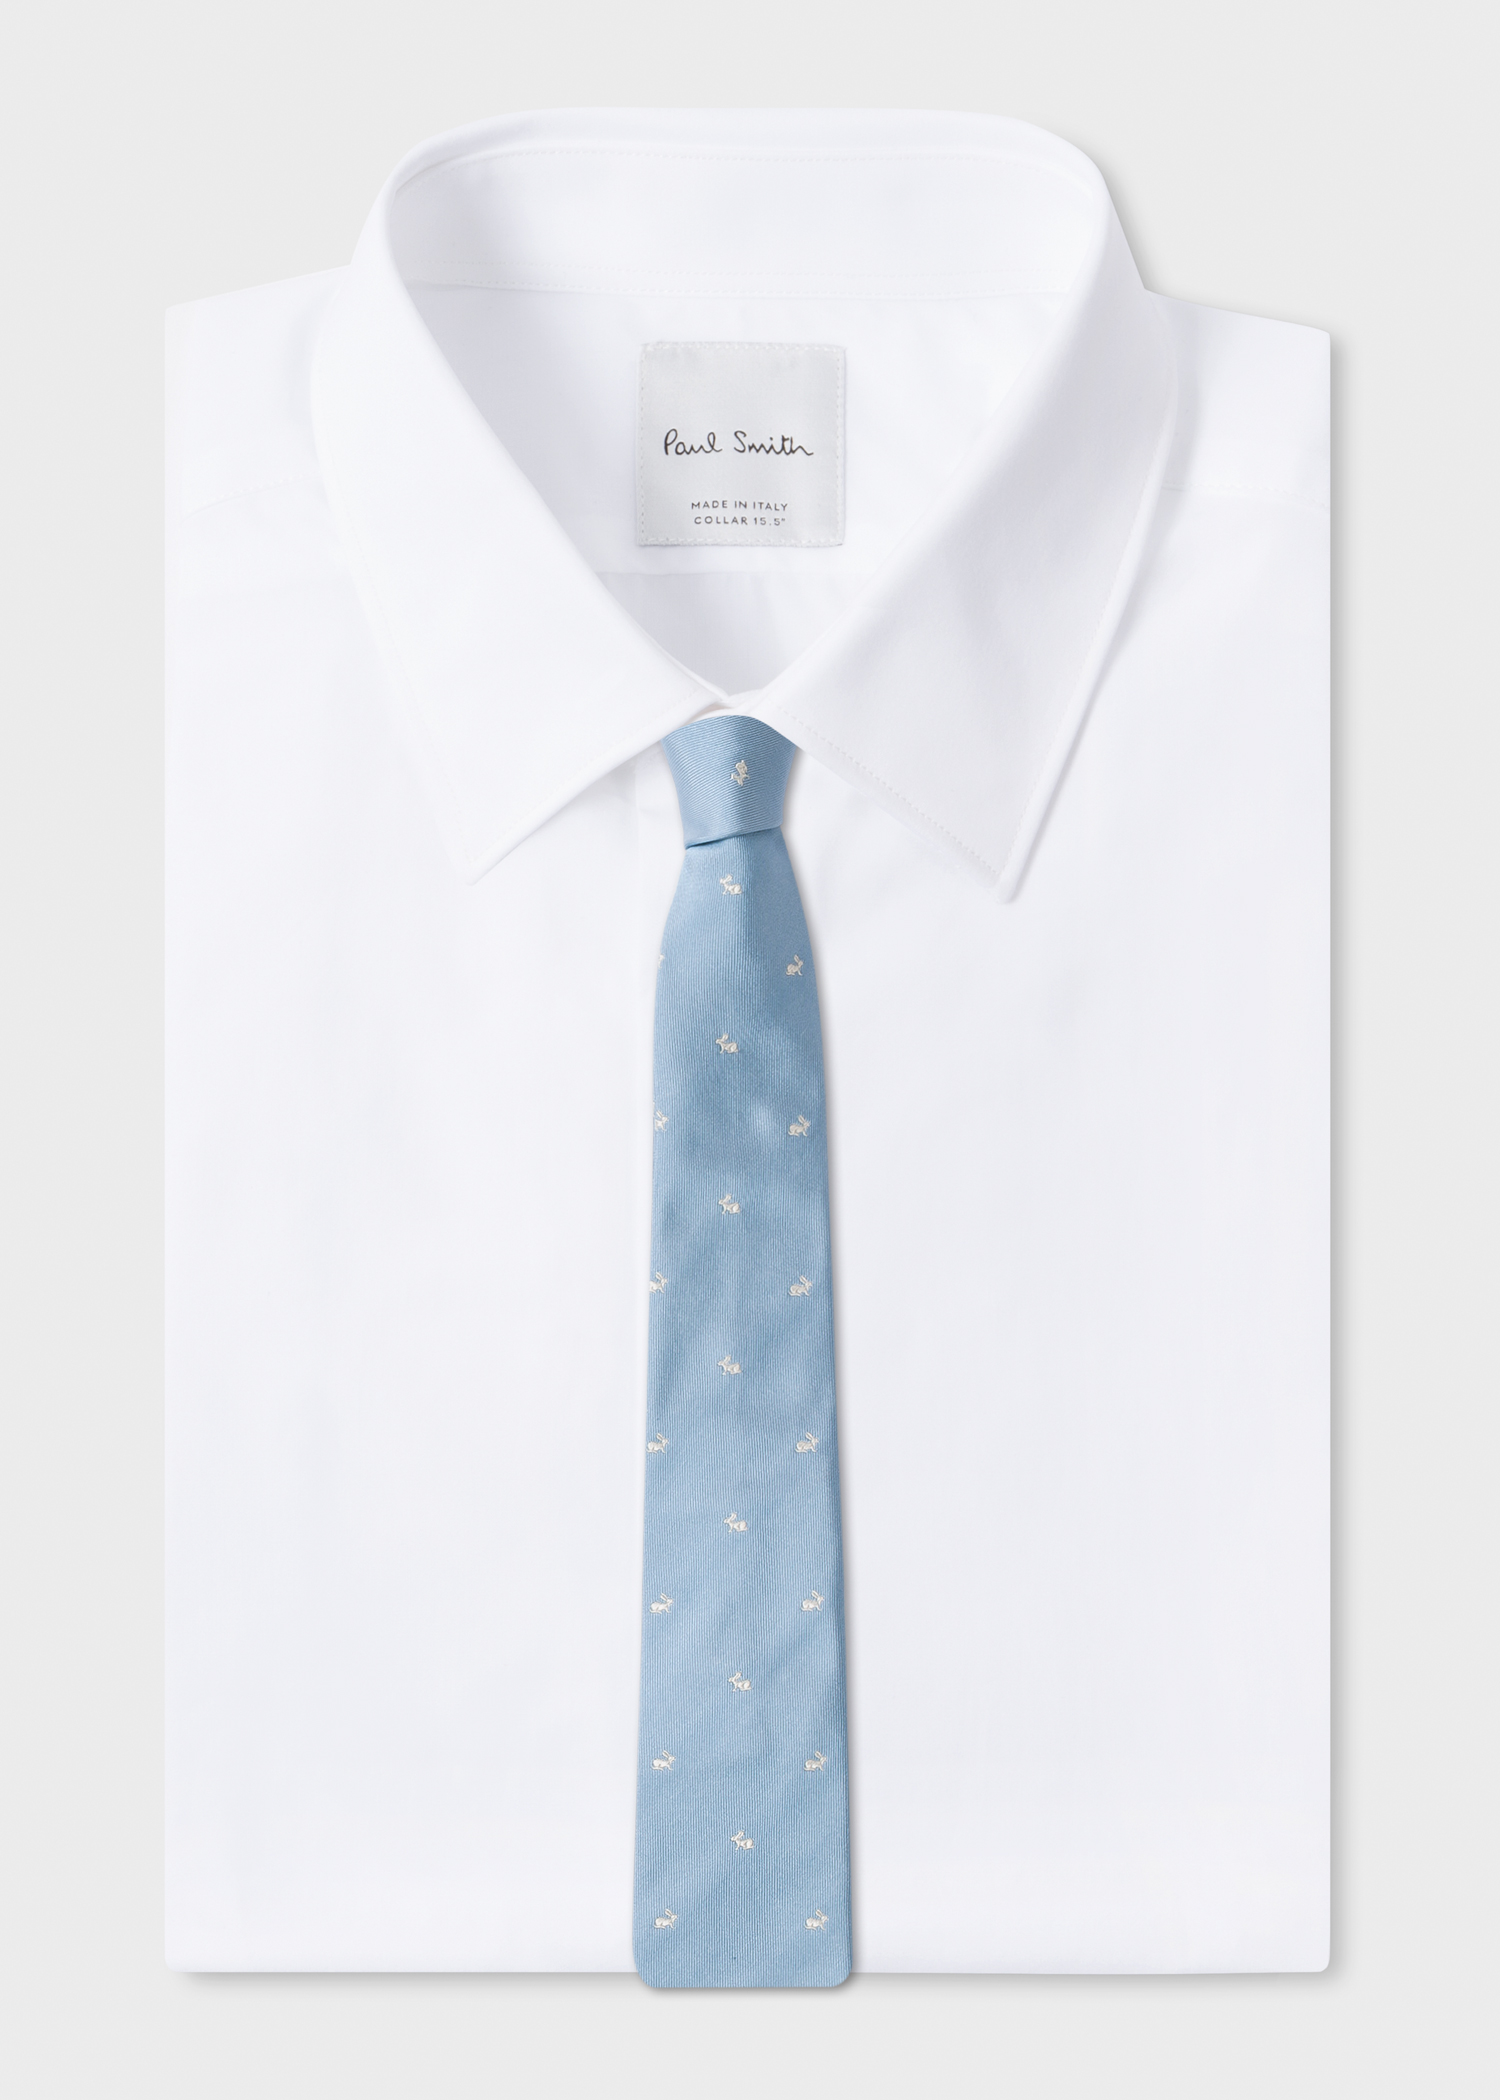 View on shirt - Men's Light Blue Rabbit Embroidery Narrow Silk Tie Paul Smith